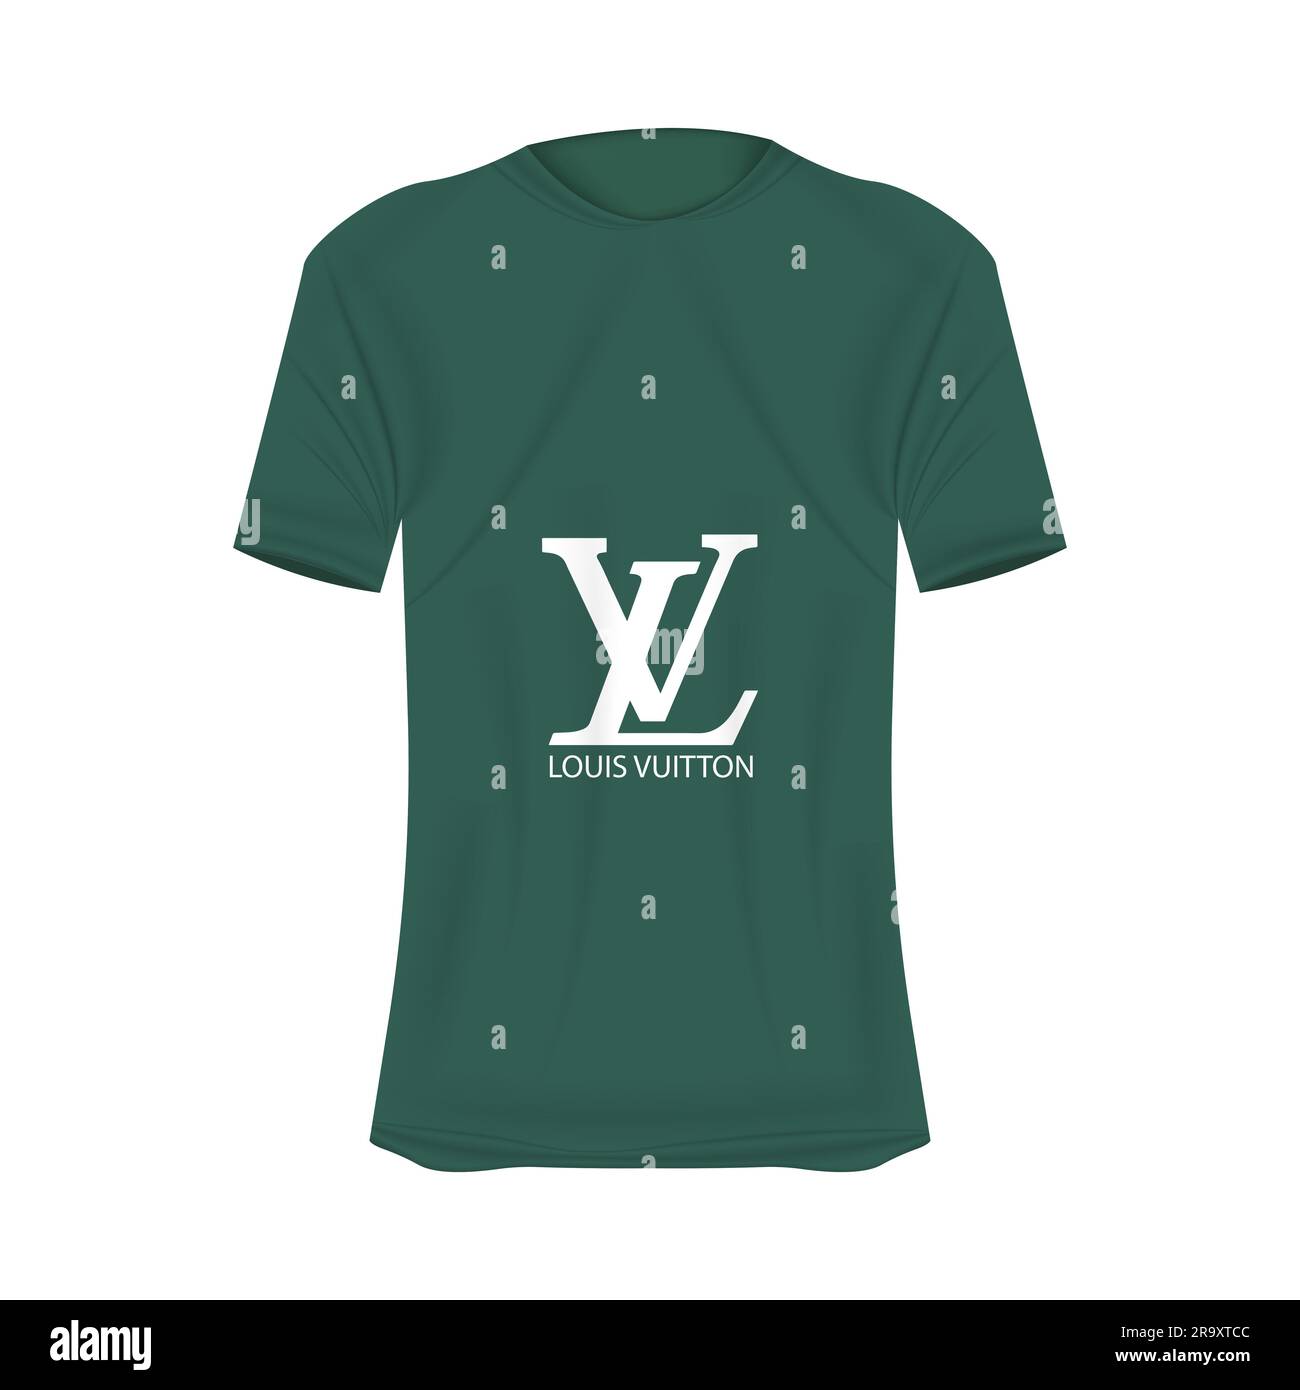 Louis Vuitton logo T-shirt mockup in green colors. Mockup of